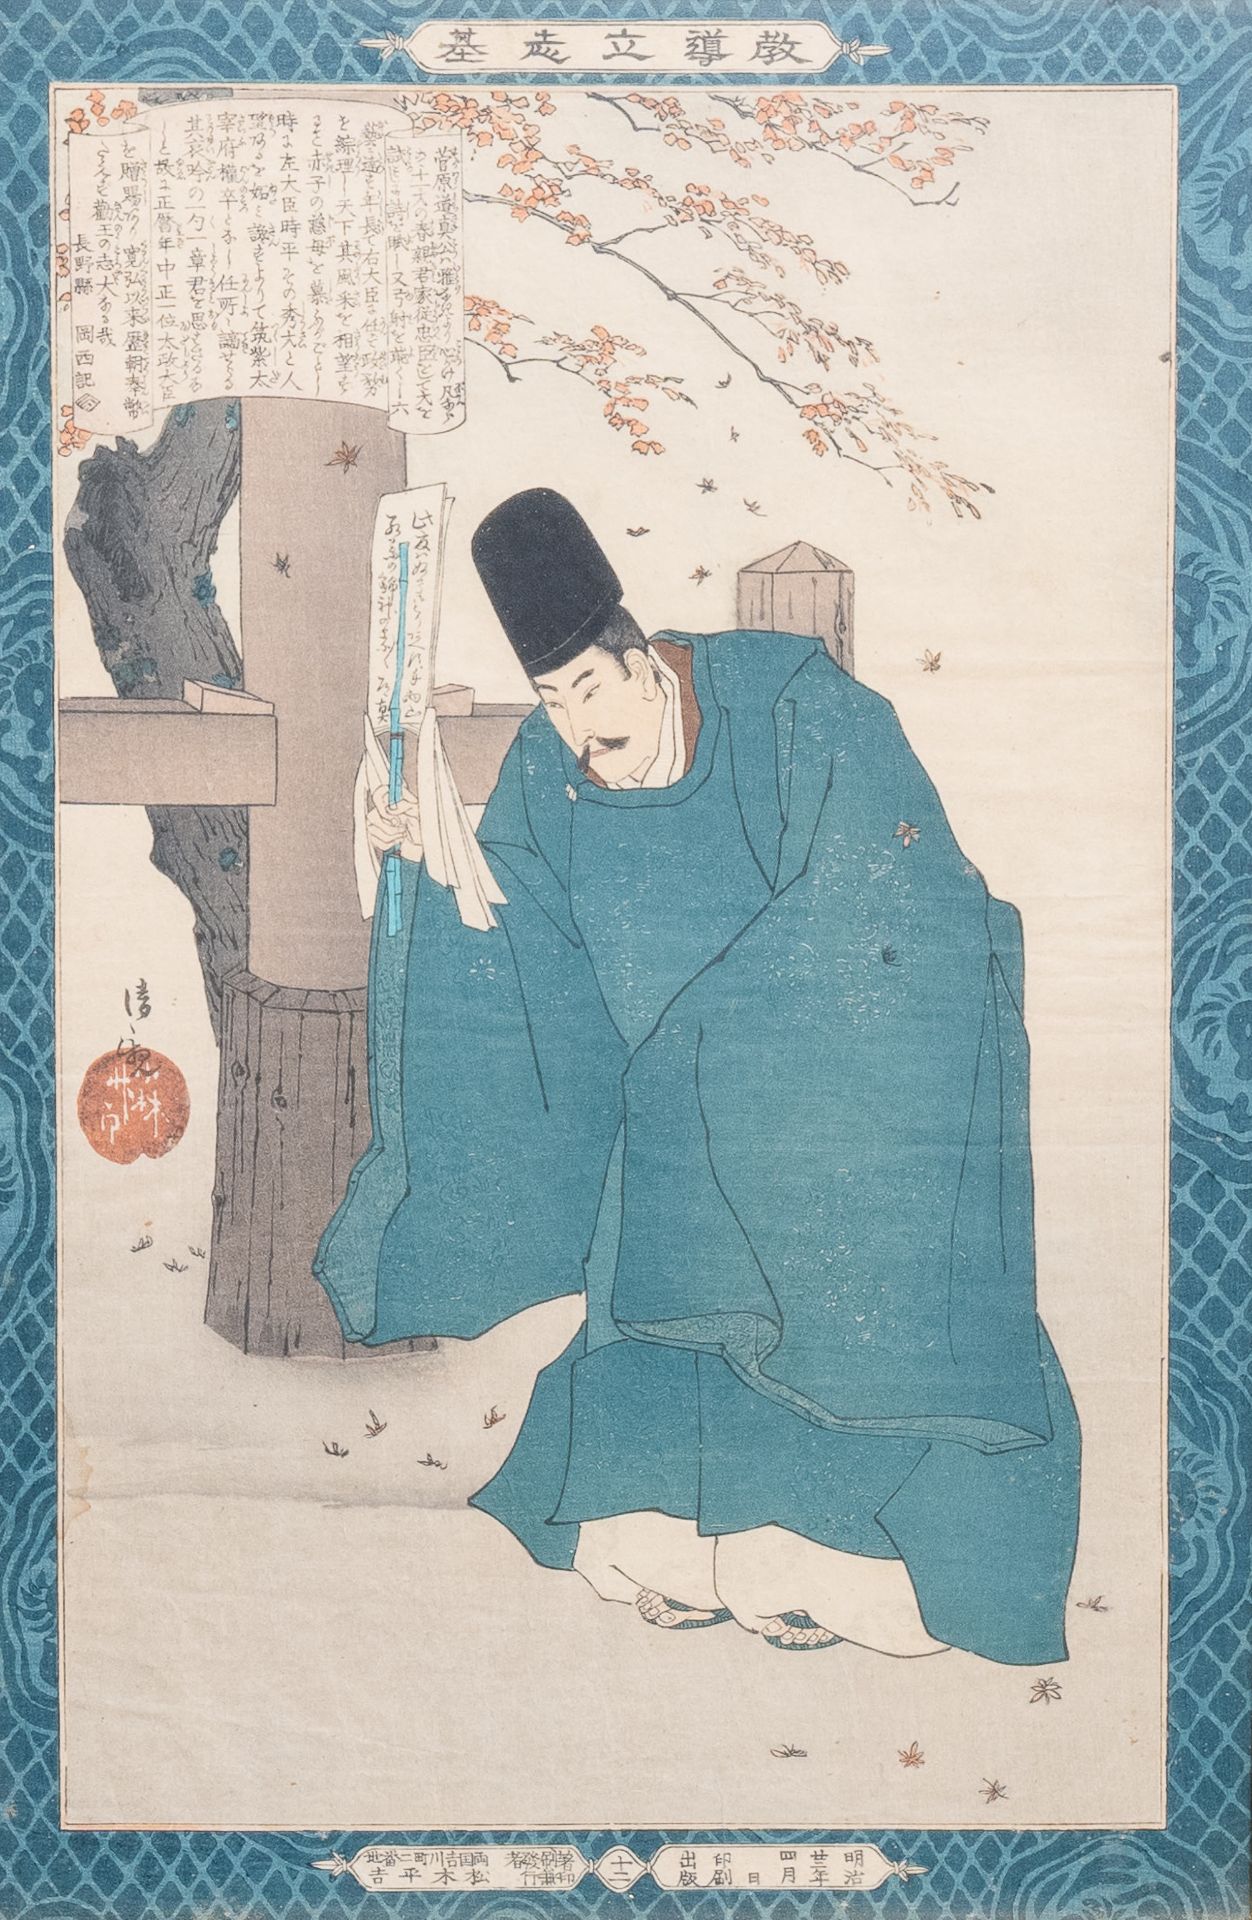 Kobayashi Kiyochika (Japan, 1847Ð1915), ukiyo-e woodblock, ca. 1889: Sugawara no Michizane